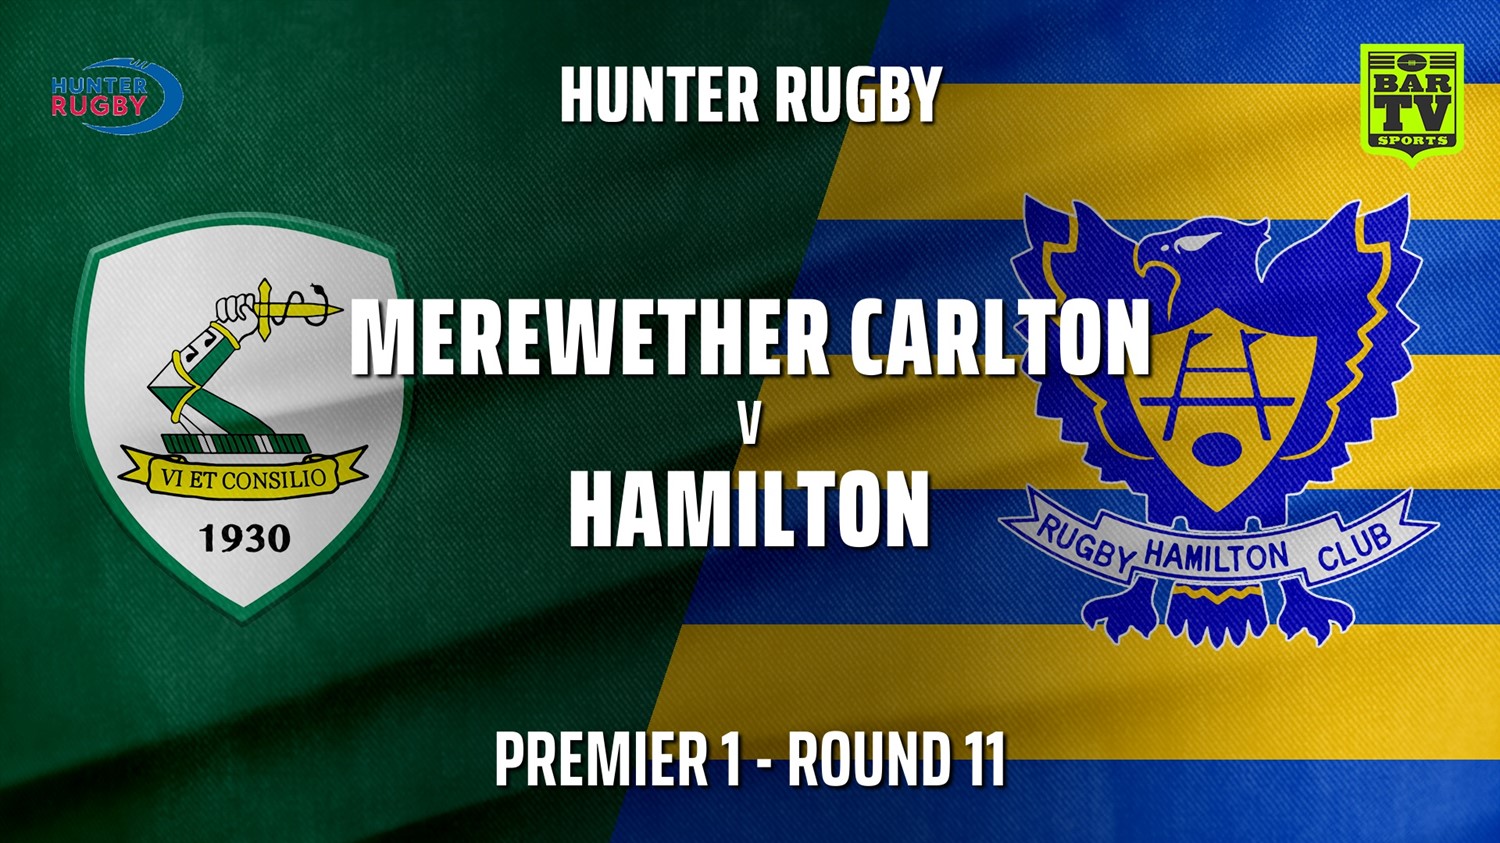 210703-Hunter Rugby Round 11 - Premier 1 - Merewether Carlton v Hamilton Hawks Minigame Slate Image